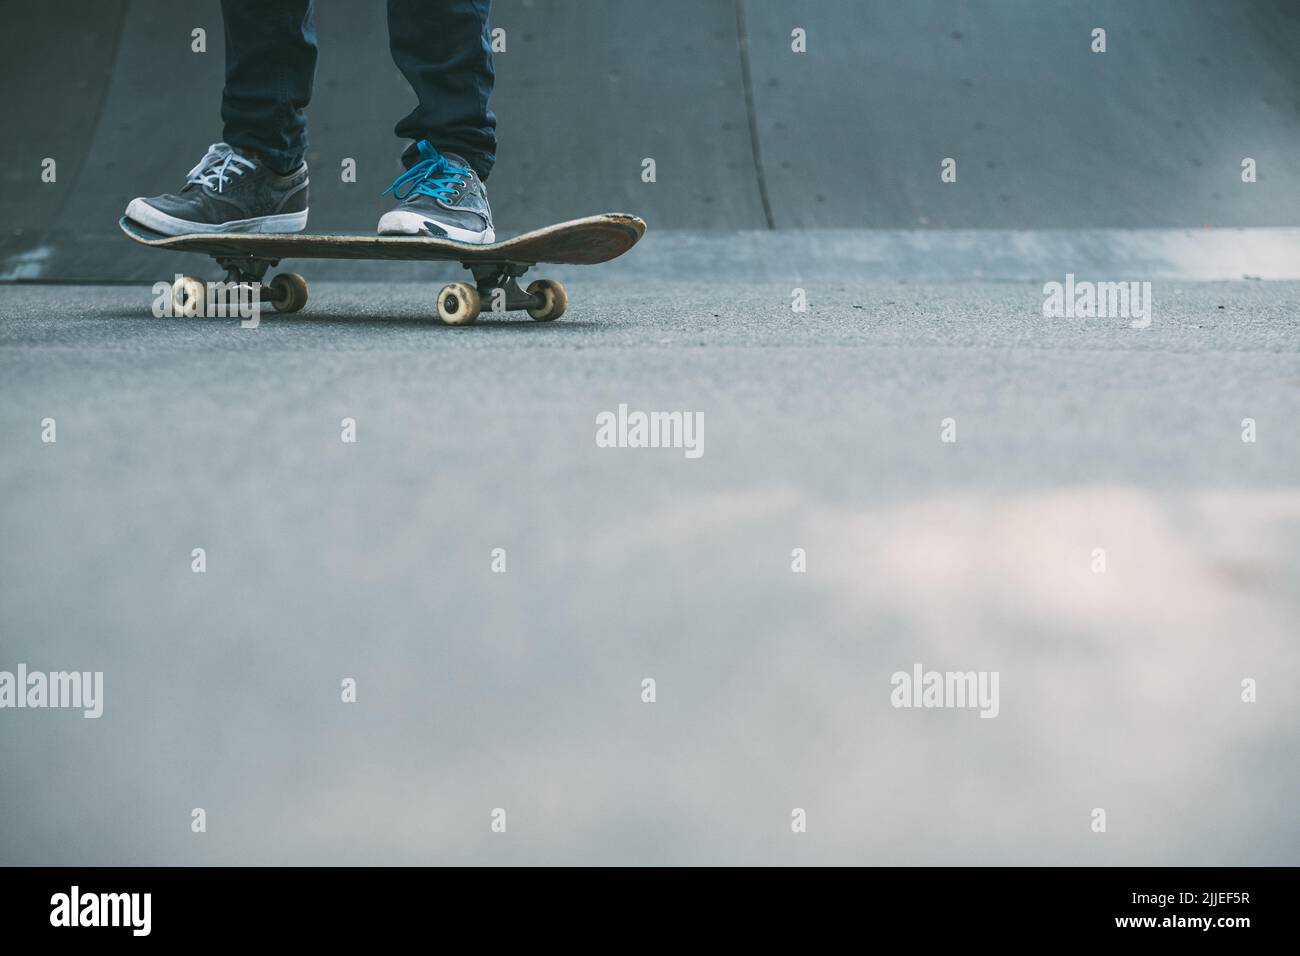 man feet skateboard ramp urban hipster lifestyle Stock Photo